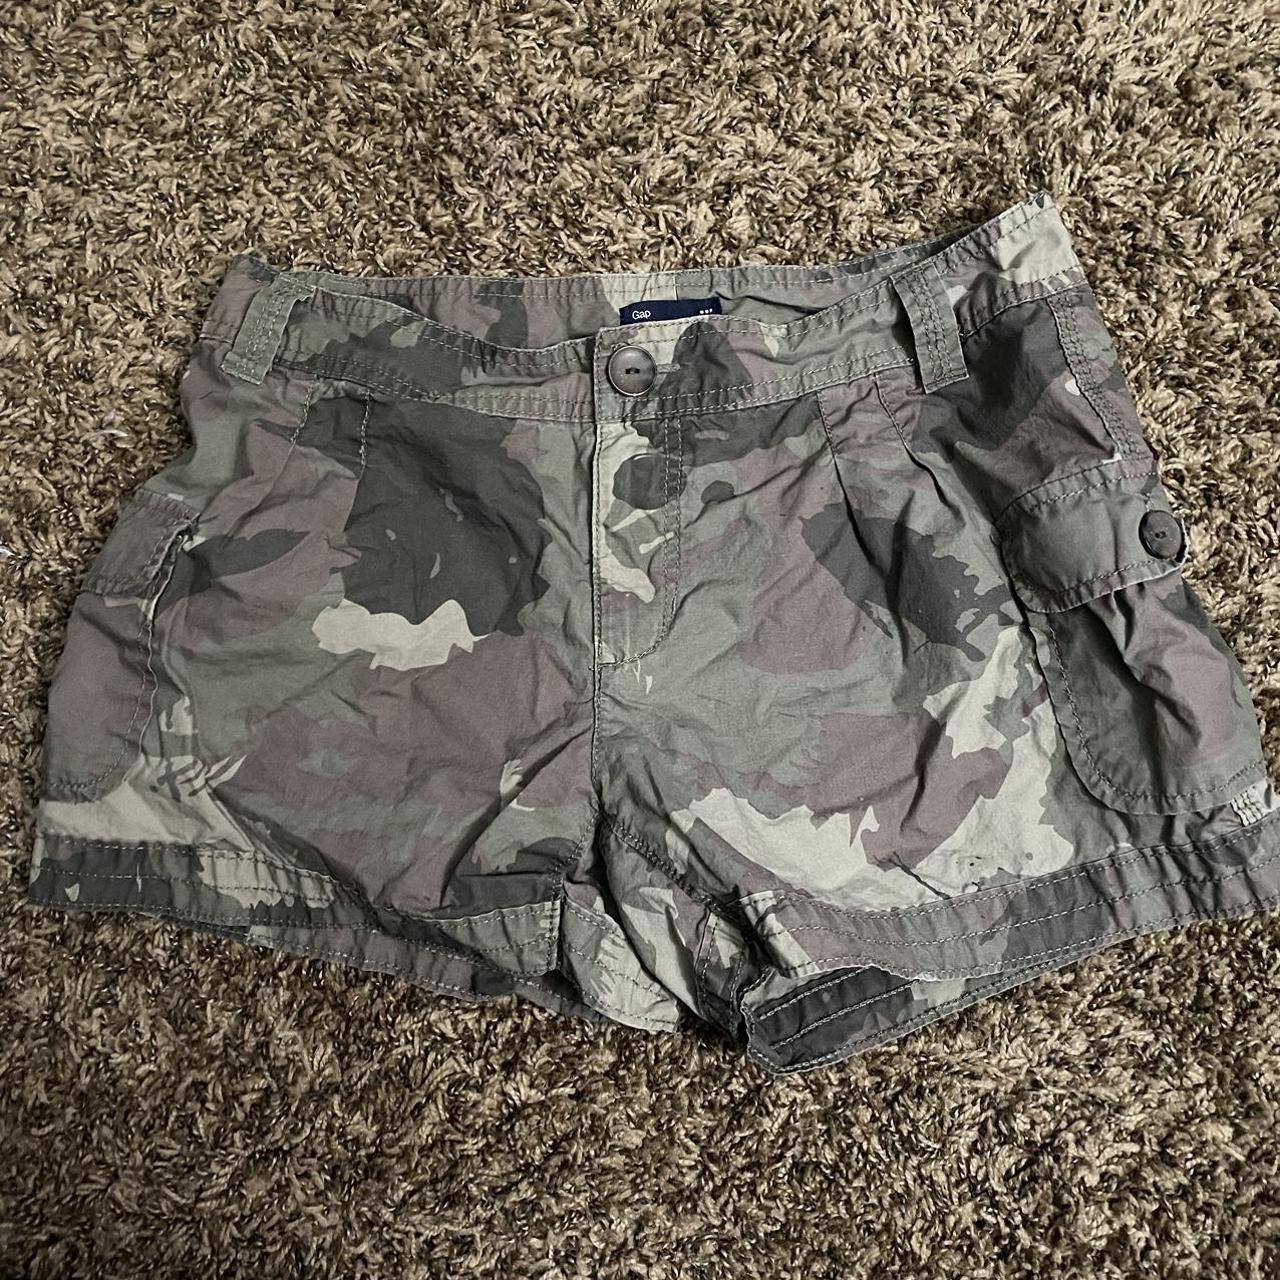 Gap Khakis Camo Cargo Shorts Men039s Size 33 Woodland Print Utility  Military  eBay